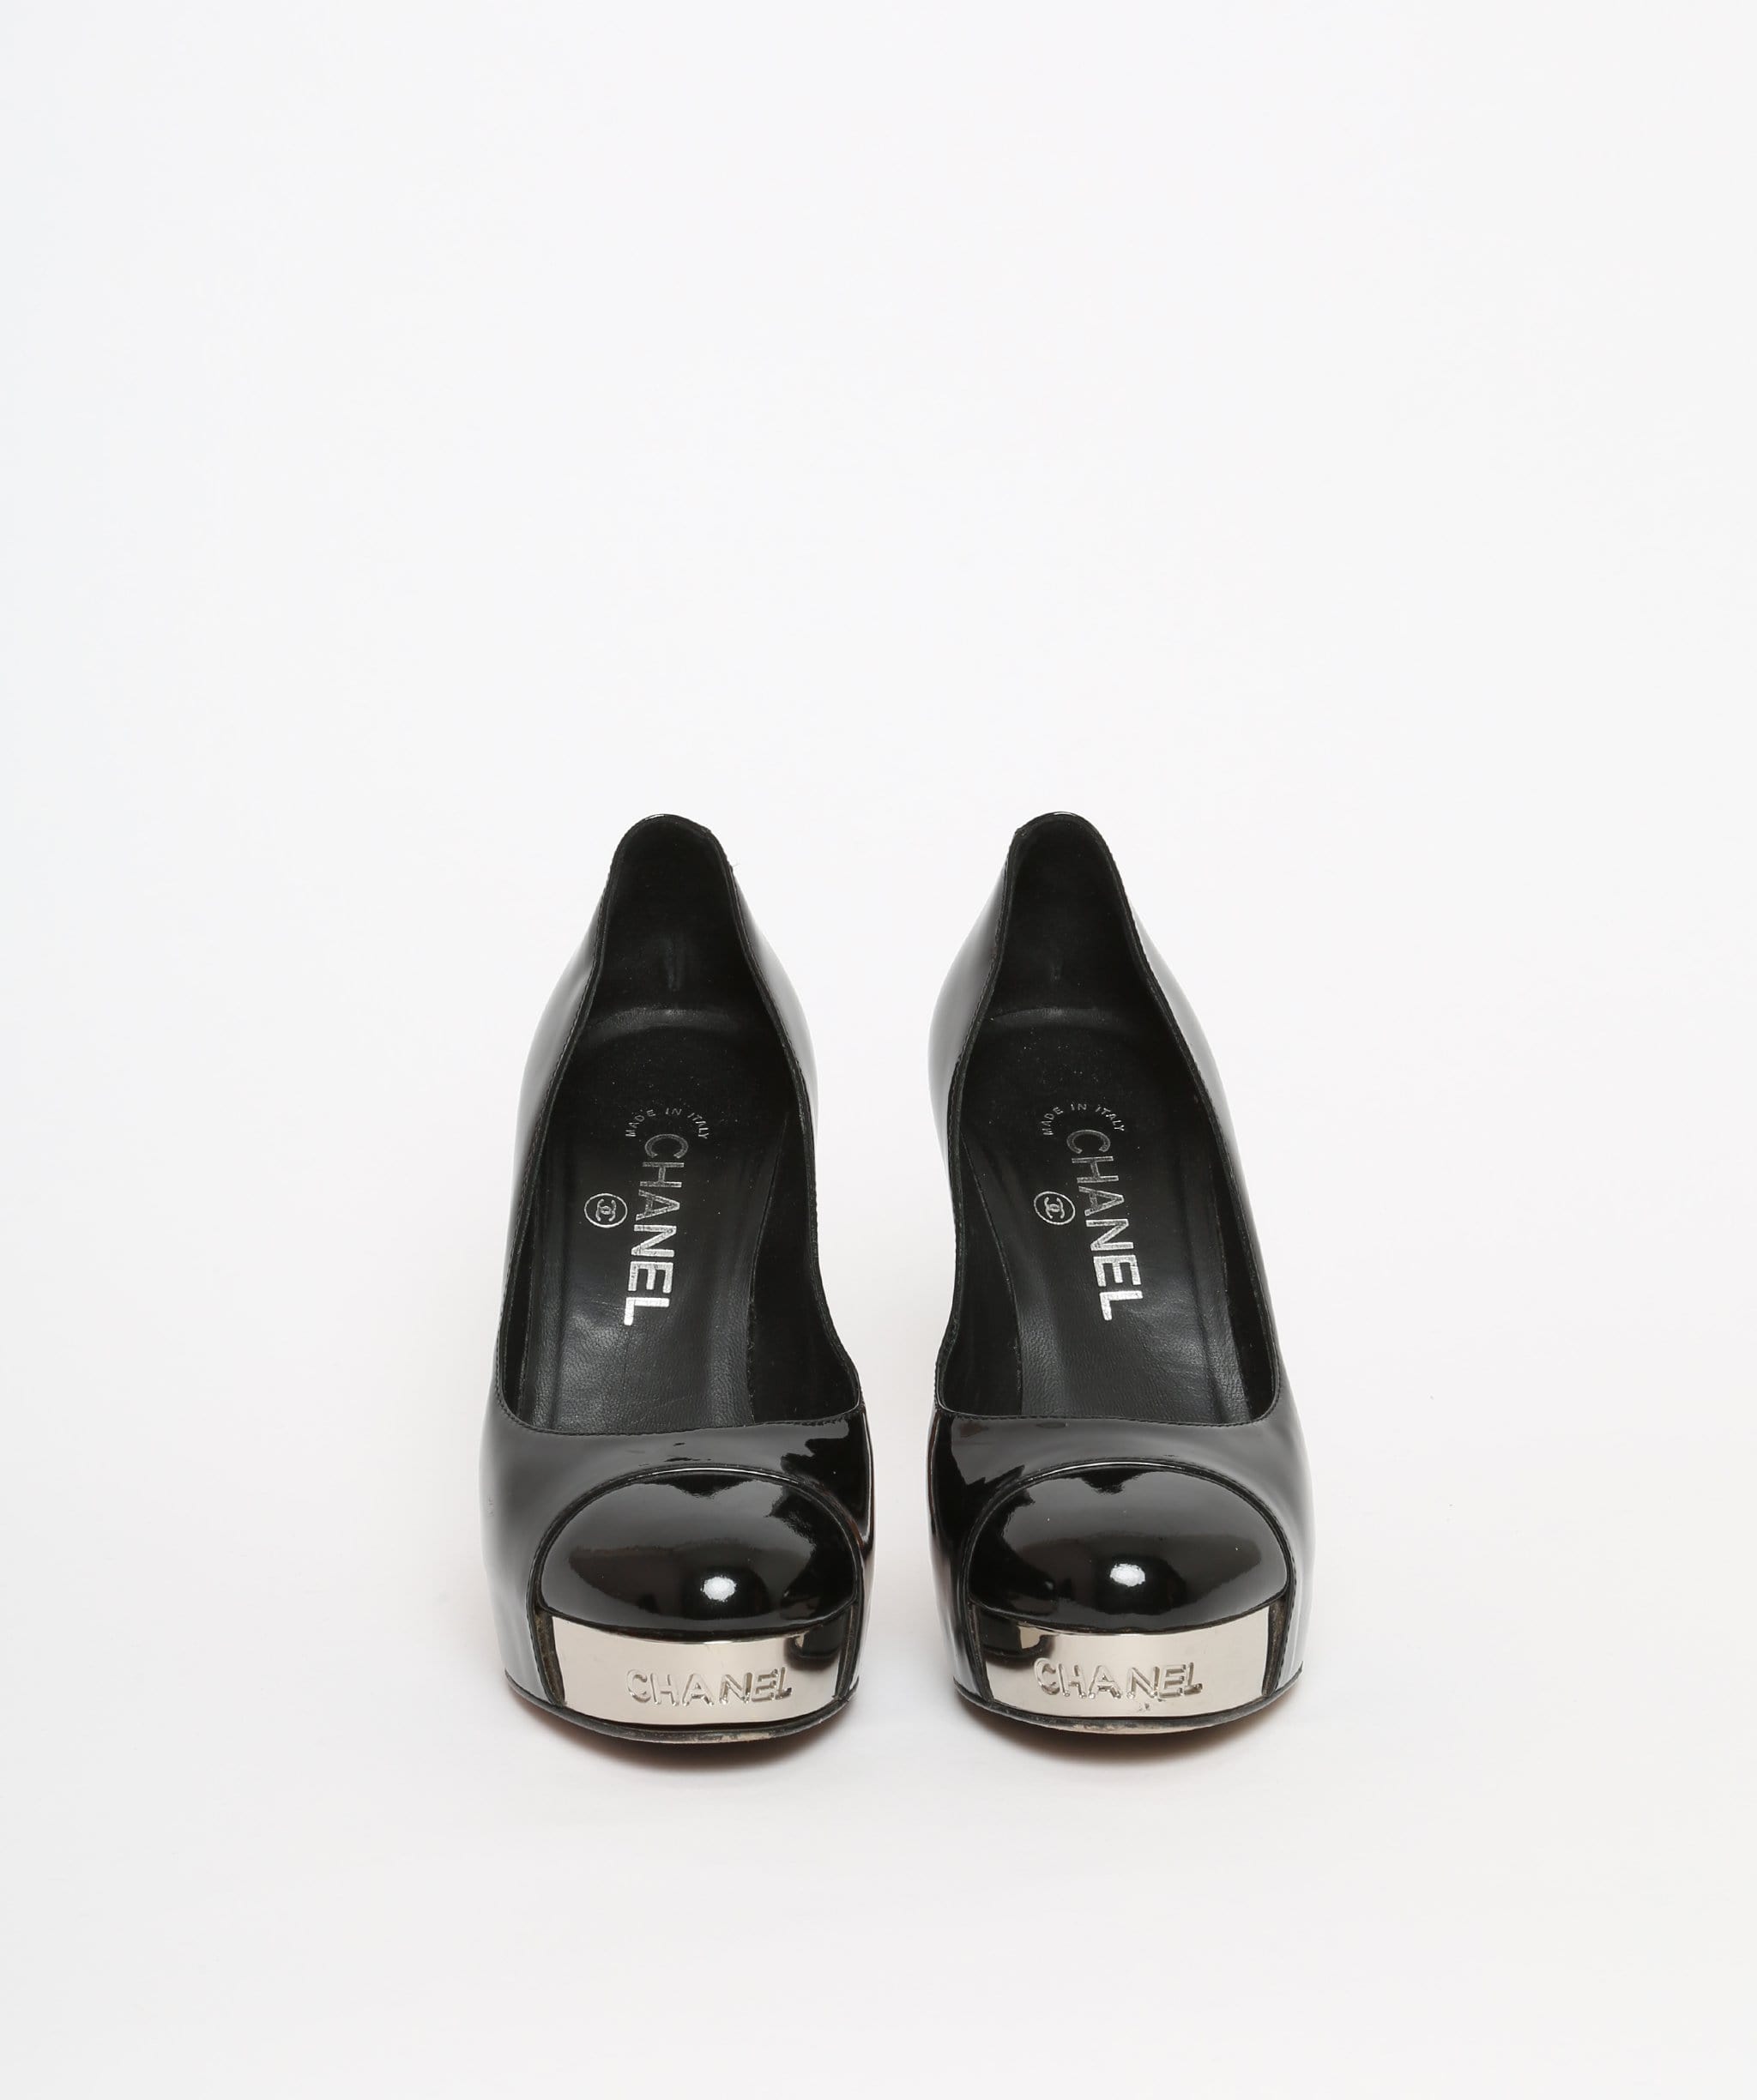 Chanel Chanel Black Patent Stiletto Heels Size 37